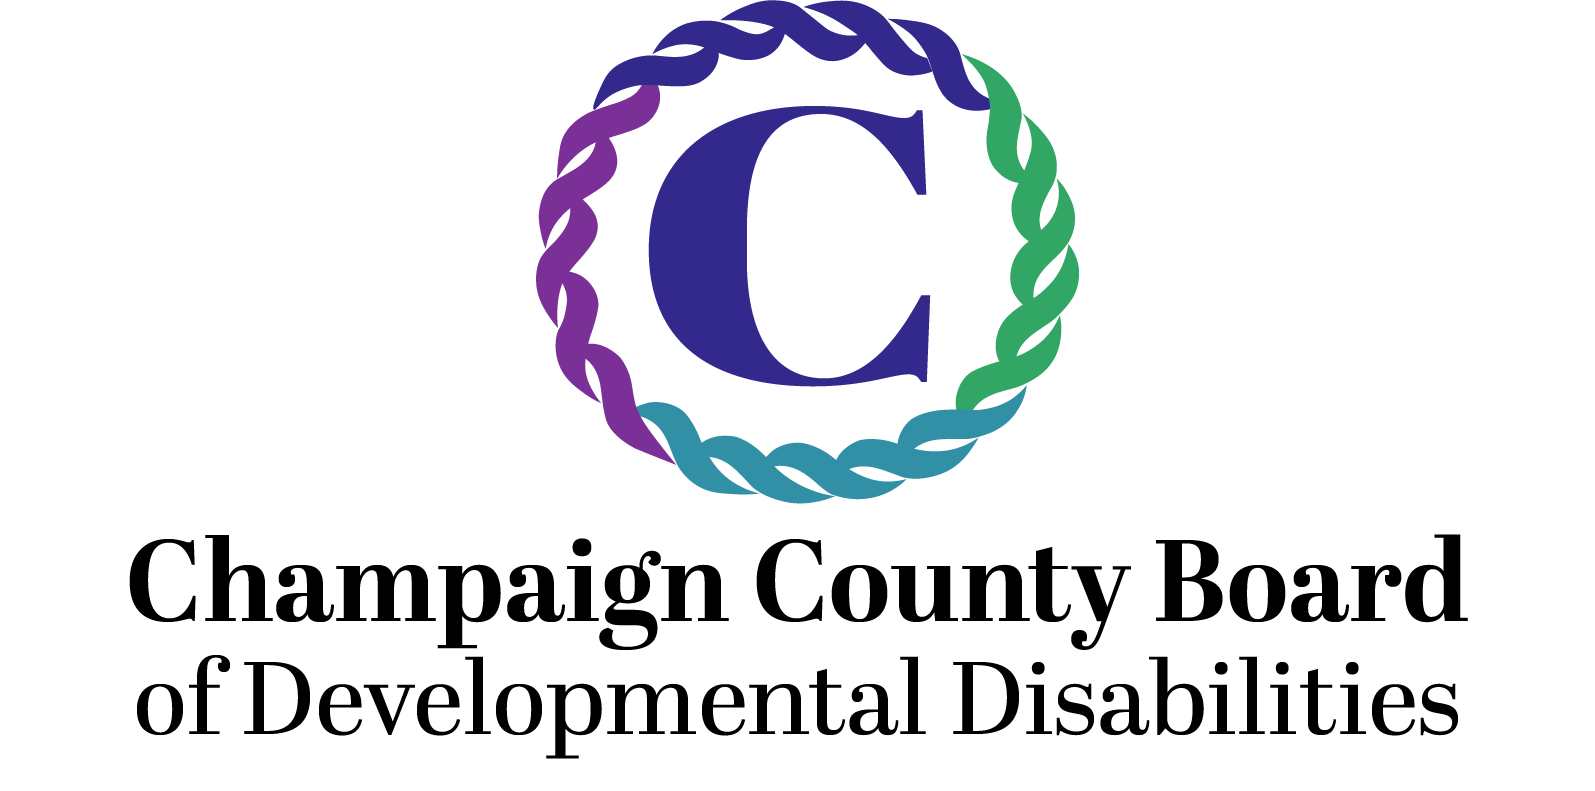 Champaign County Board of Developmental Disabilities logo